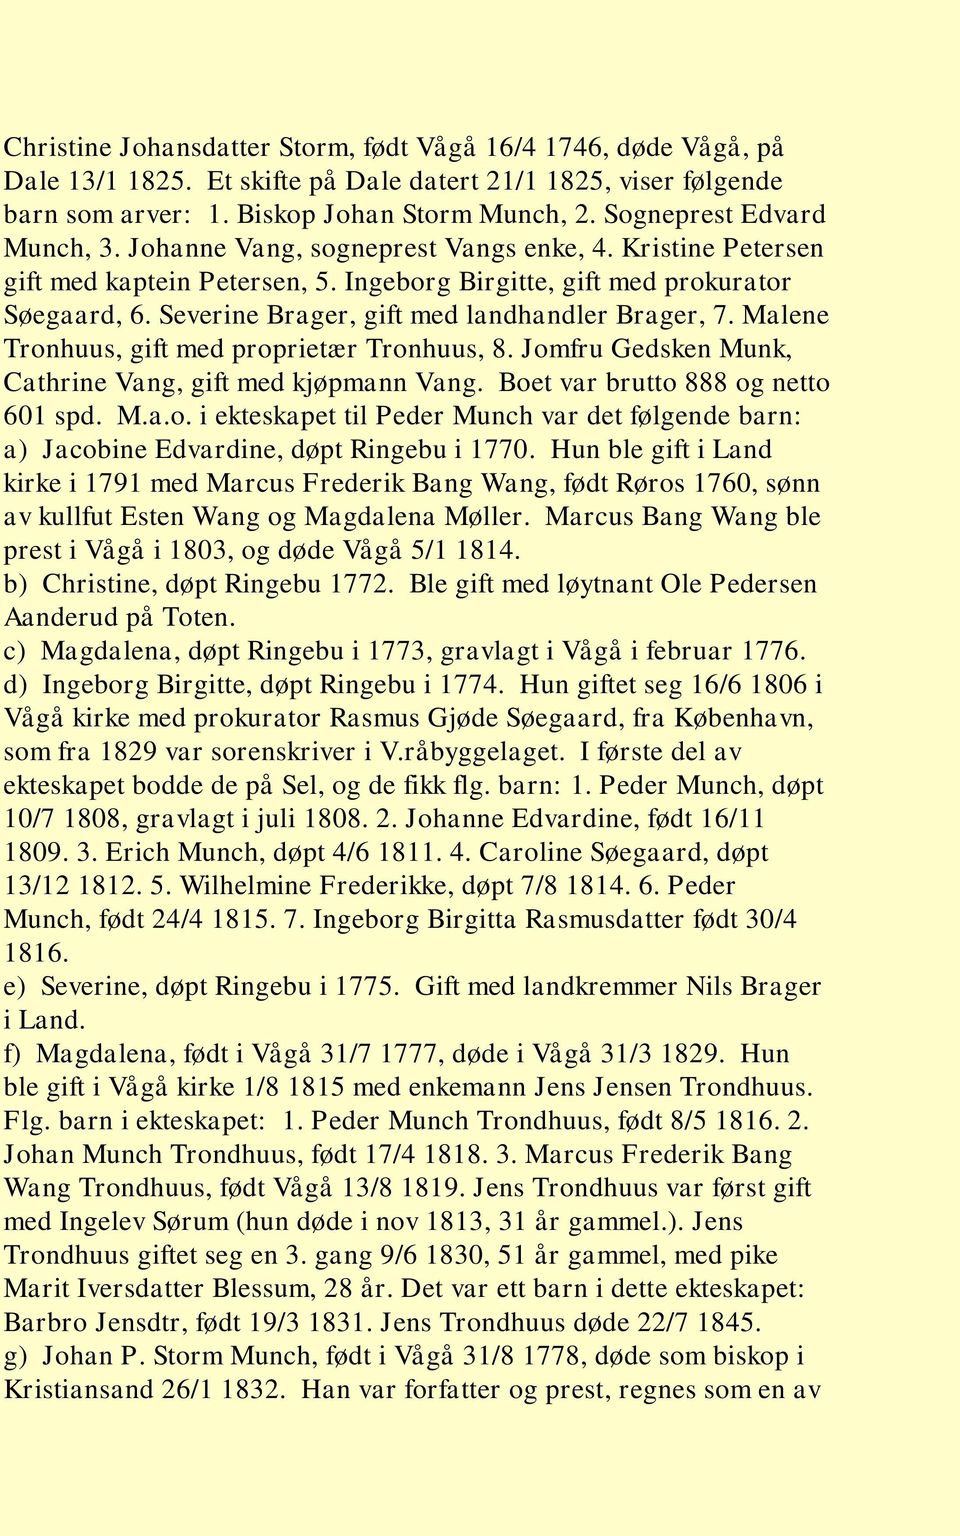 Severine Brager, gift med landhandler Brager, 7. Malene Tronhuus, gift med proprietær Tronhuus, 8. Jomfru Gedsken Munk, Cathrine Vang, gift med kjøpmann Vang. Boet var brutto 888 og netto 601 spd. M.a.o. i ekteskapet til Peder Munch var det følgende barn: a) Jacobine Edvardine, døpt Ringebu i 1770.